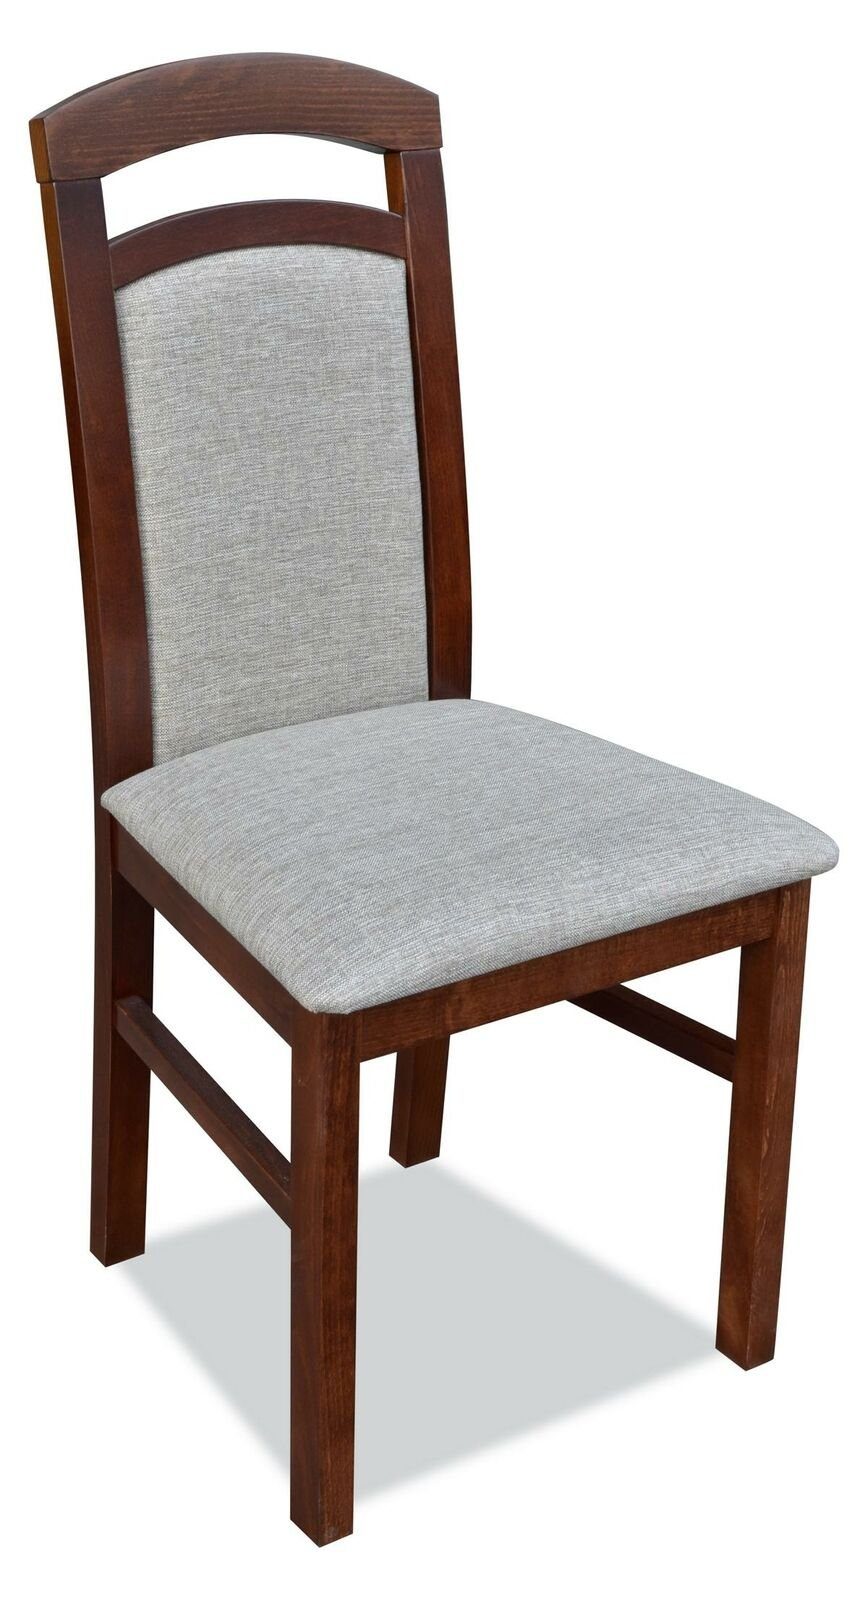 8x Neu Stuhl Textil Polsterstuhl Esszimmer Set Küche Stühle Stuhl, Club Fernseh Lounge JVmoebel